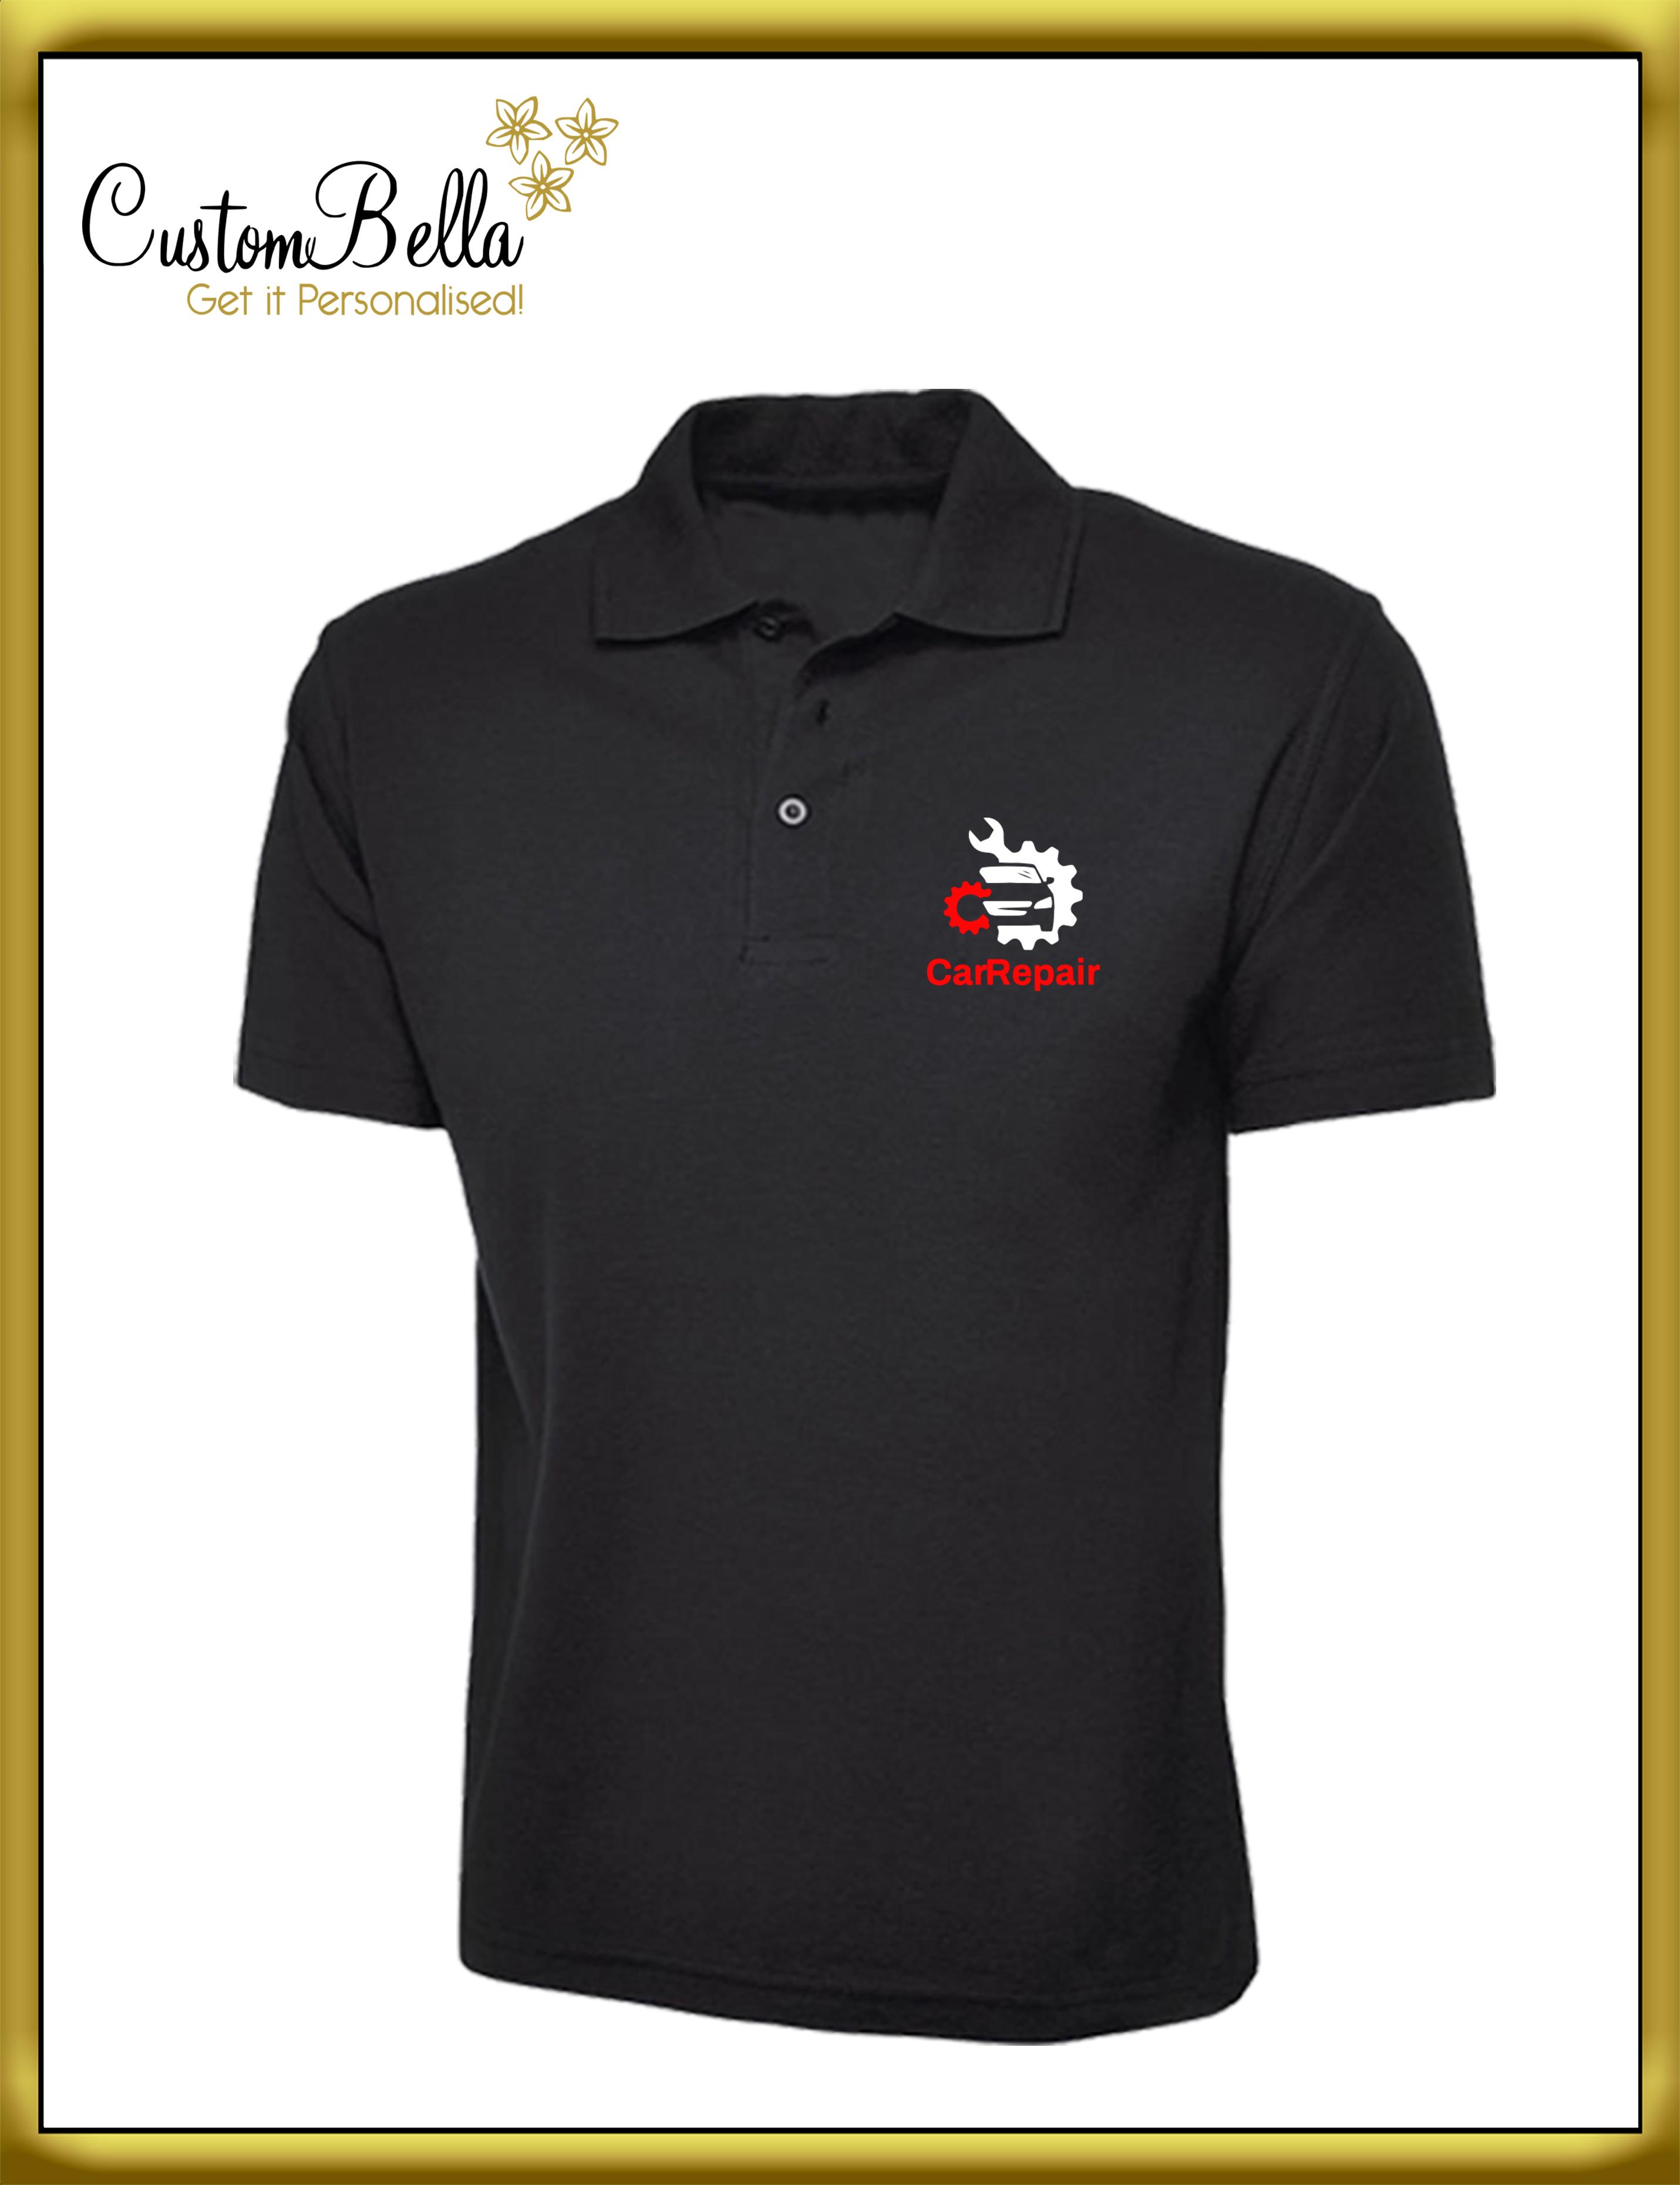 Personalised Plus Size Printed Polo Shirt black